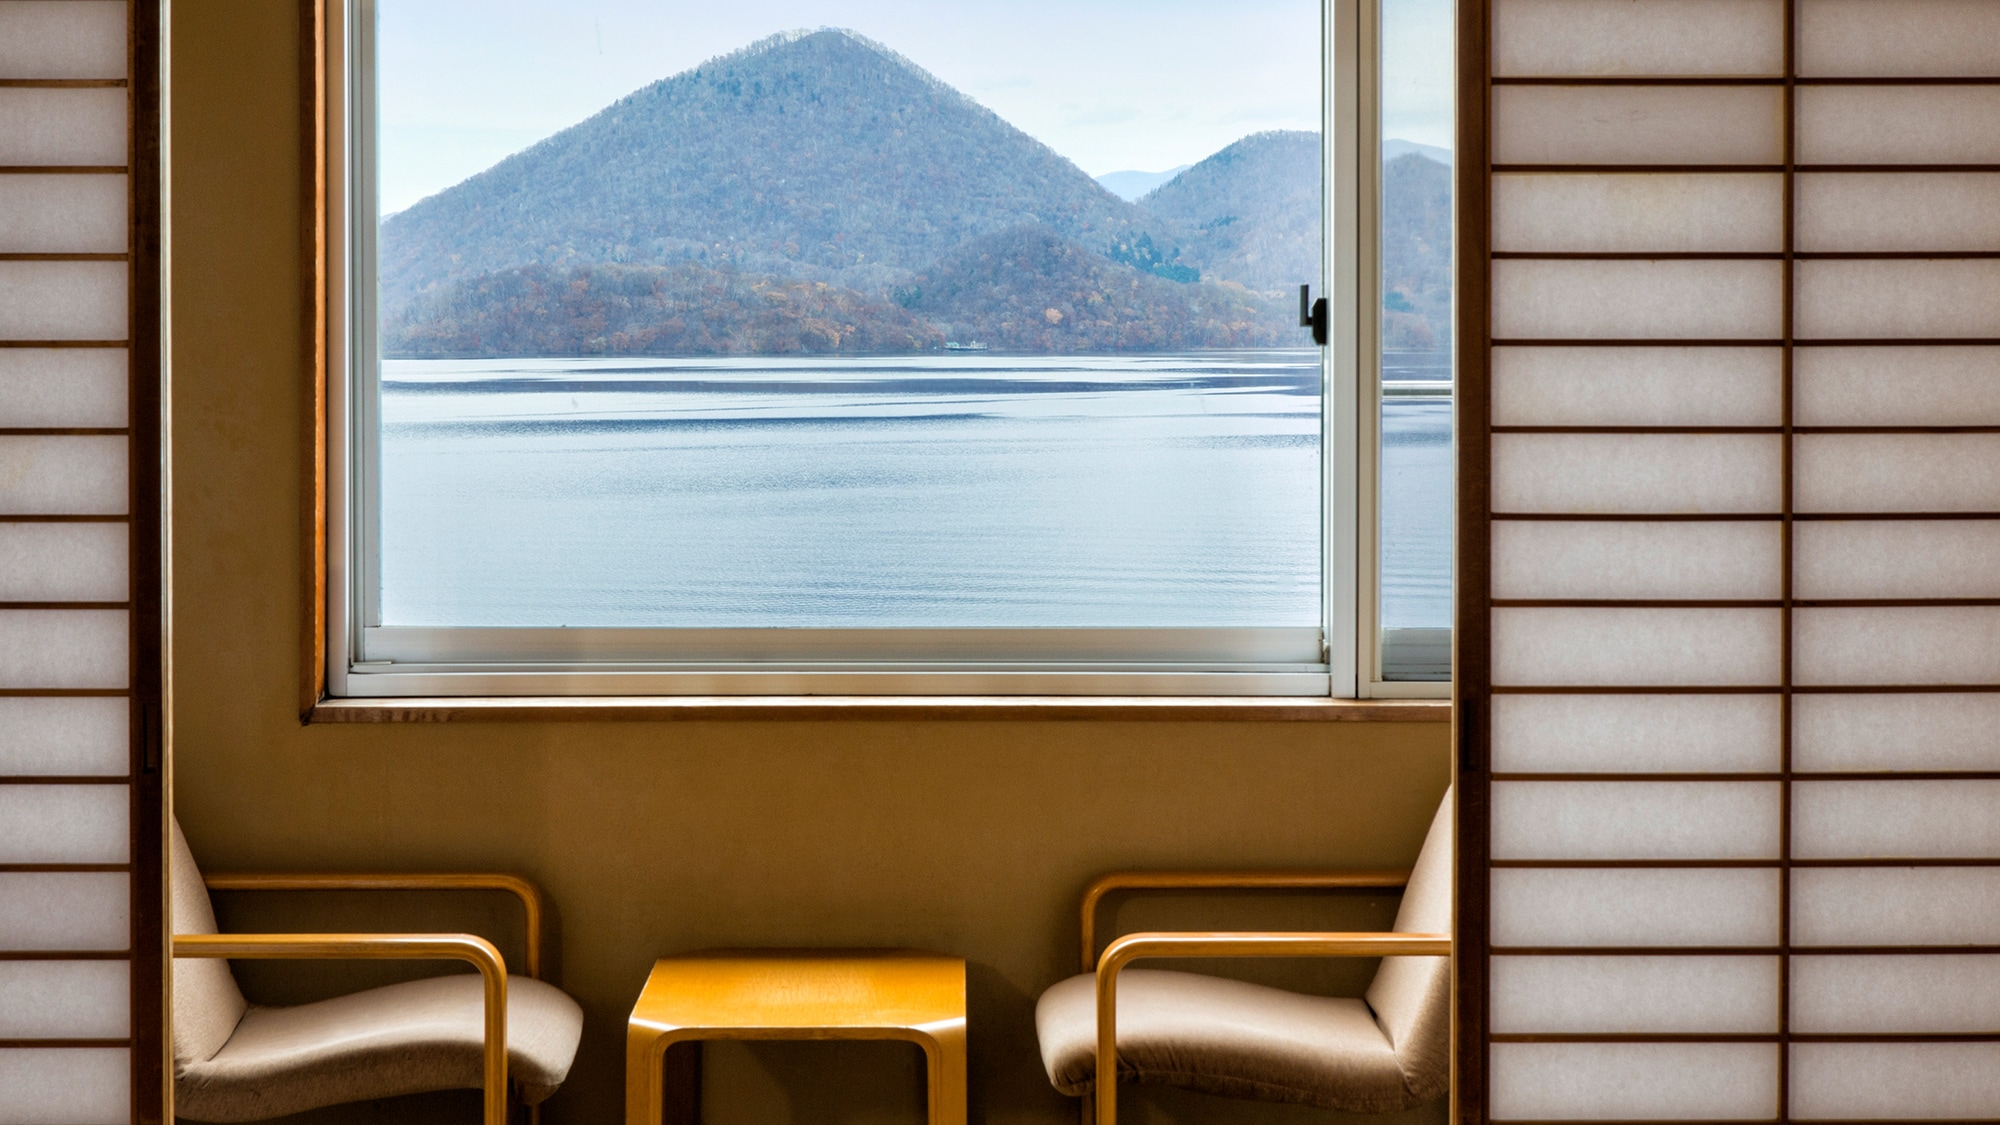 Lake side Japanese-style room